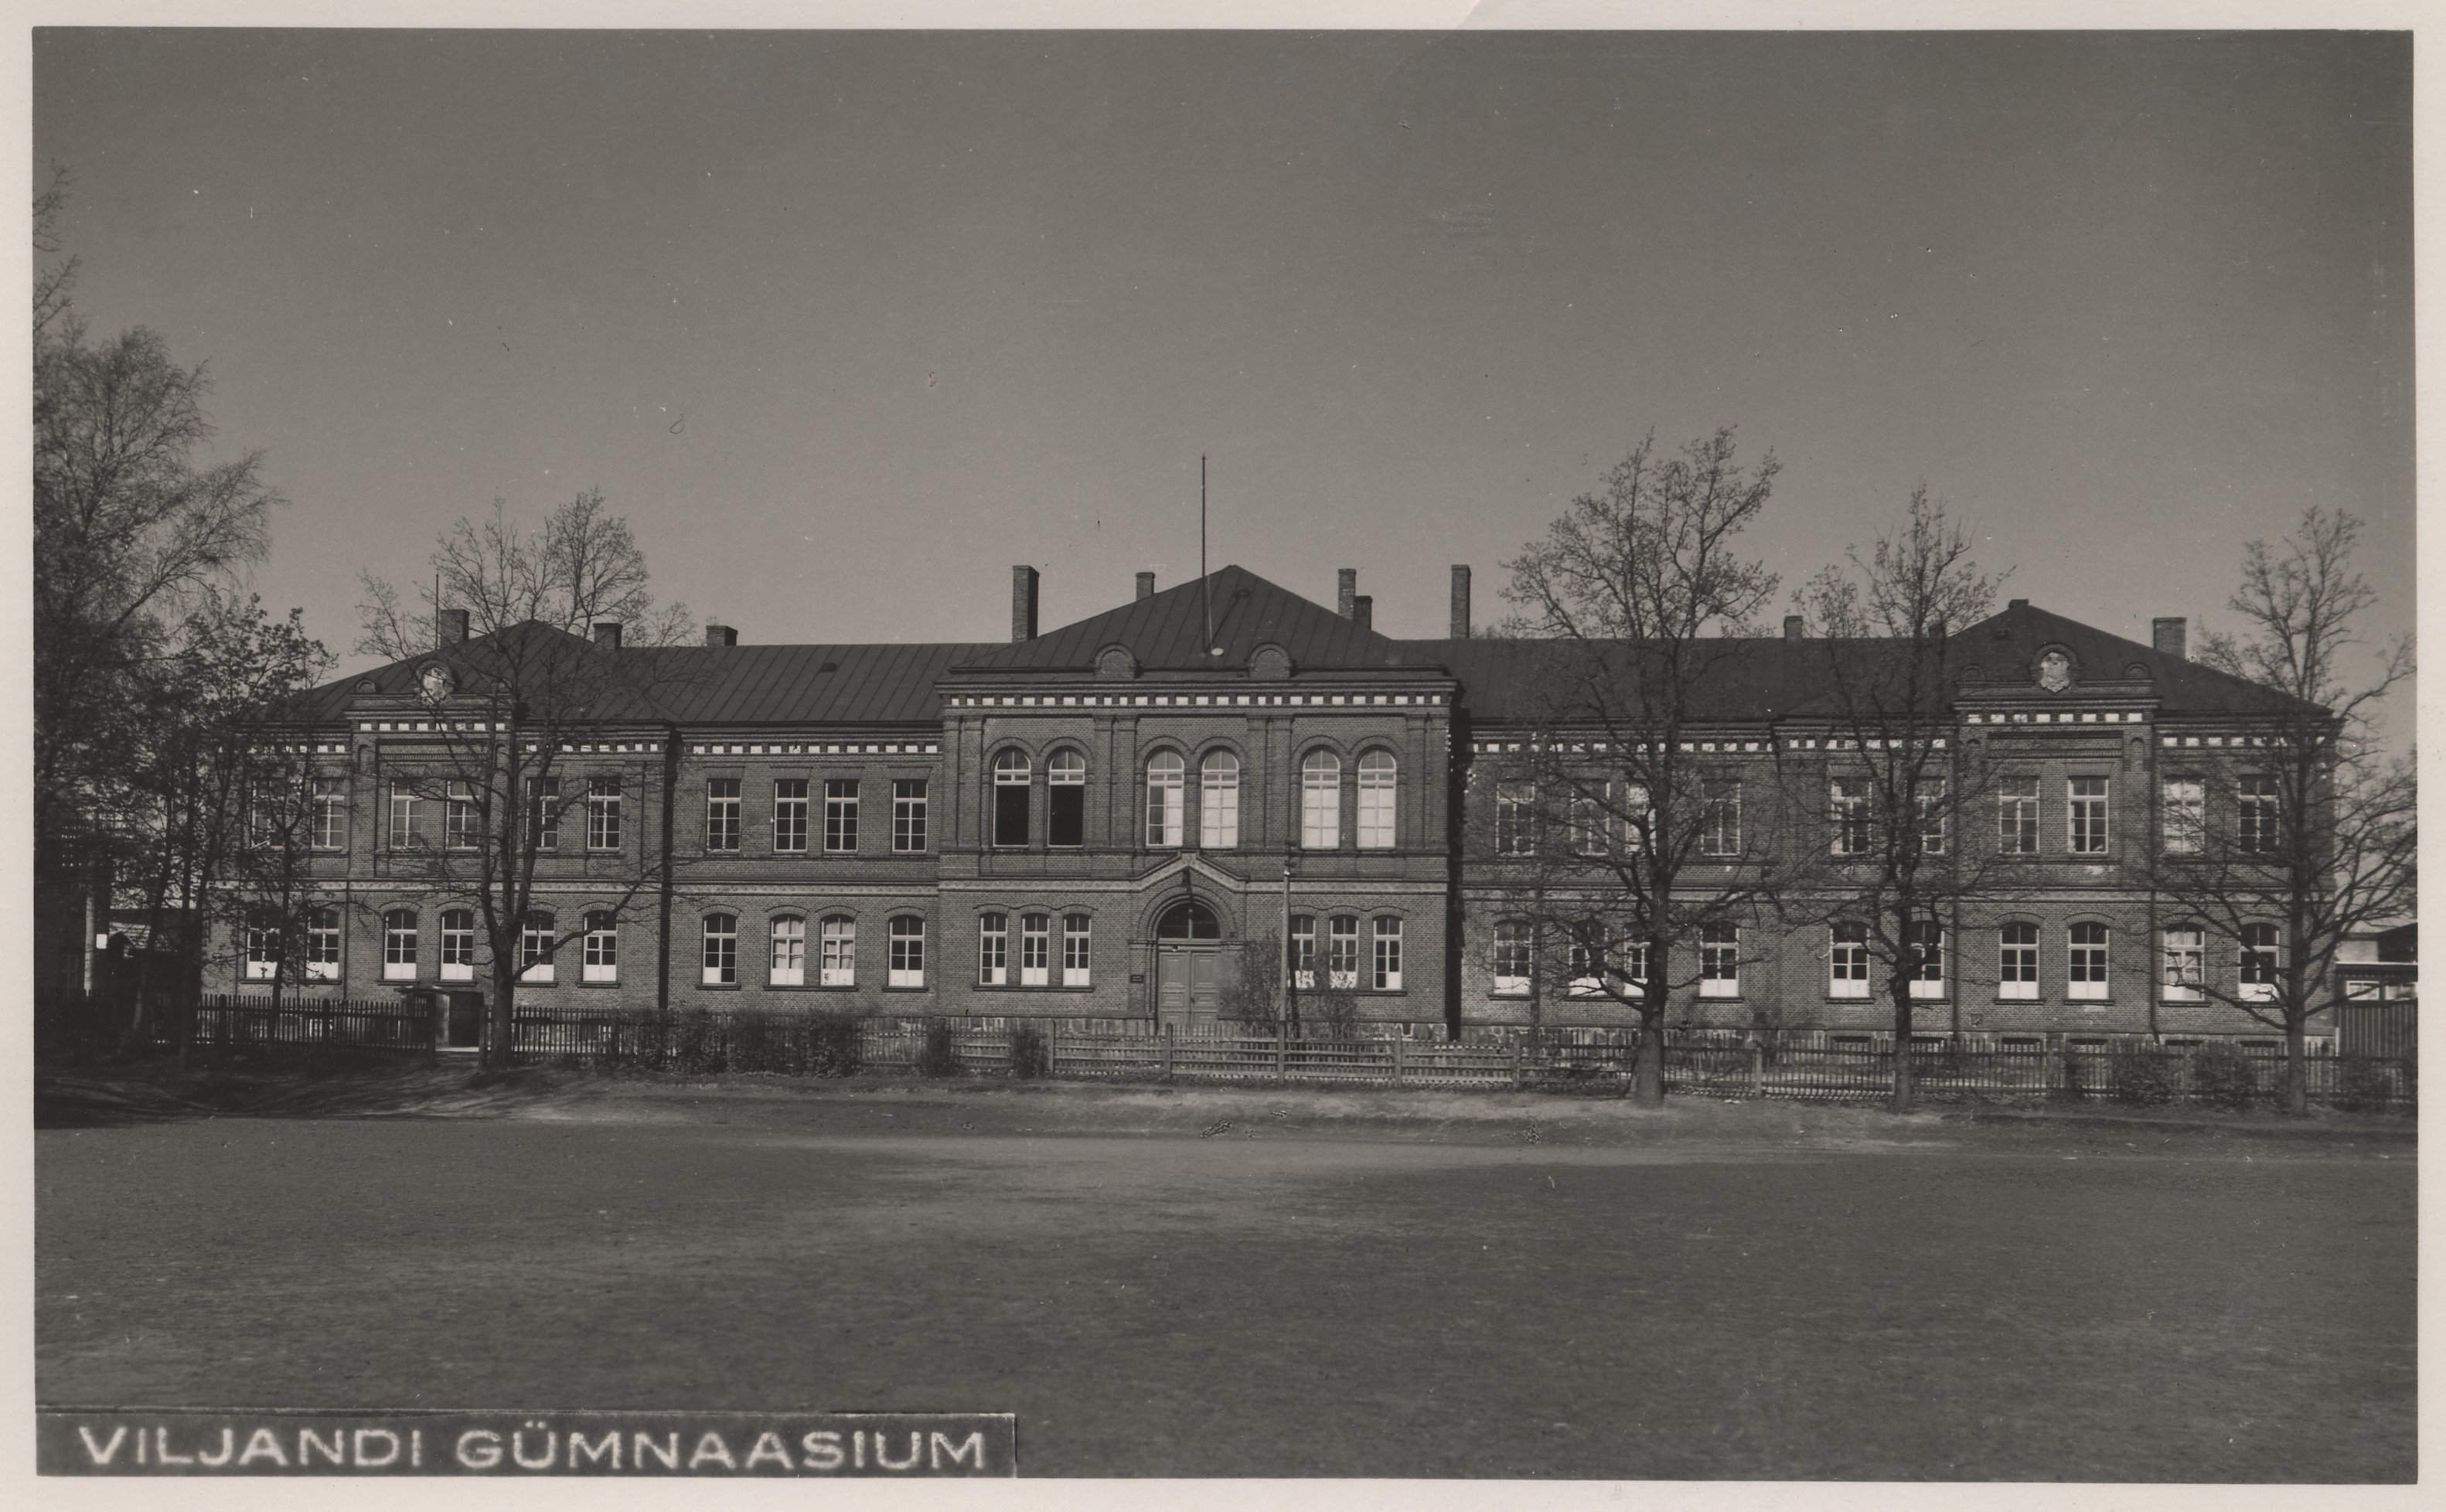 Viljandi Gymnasium